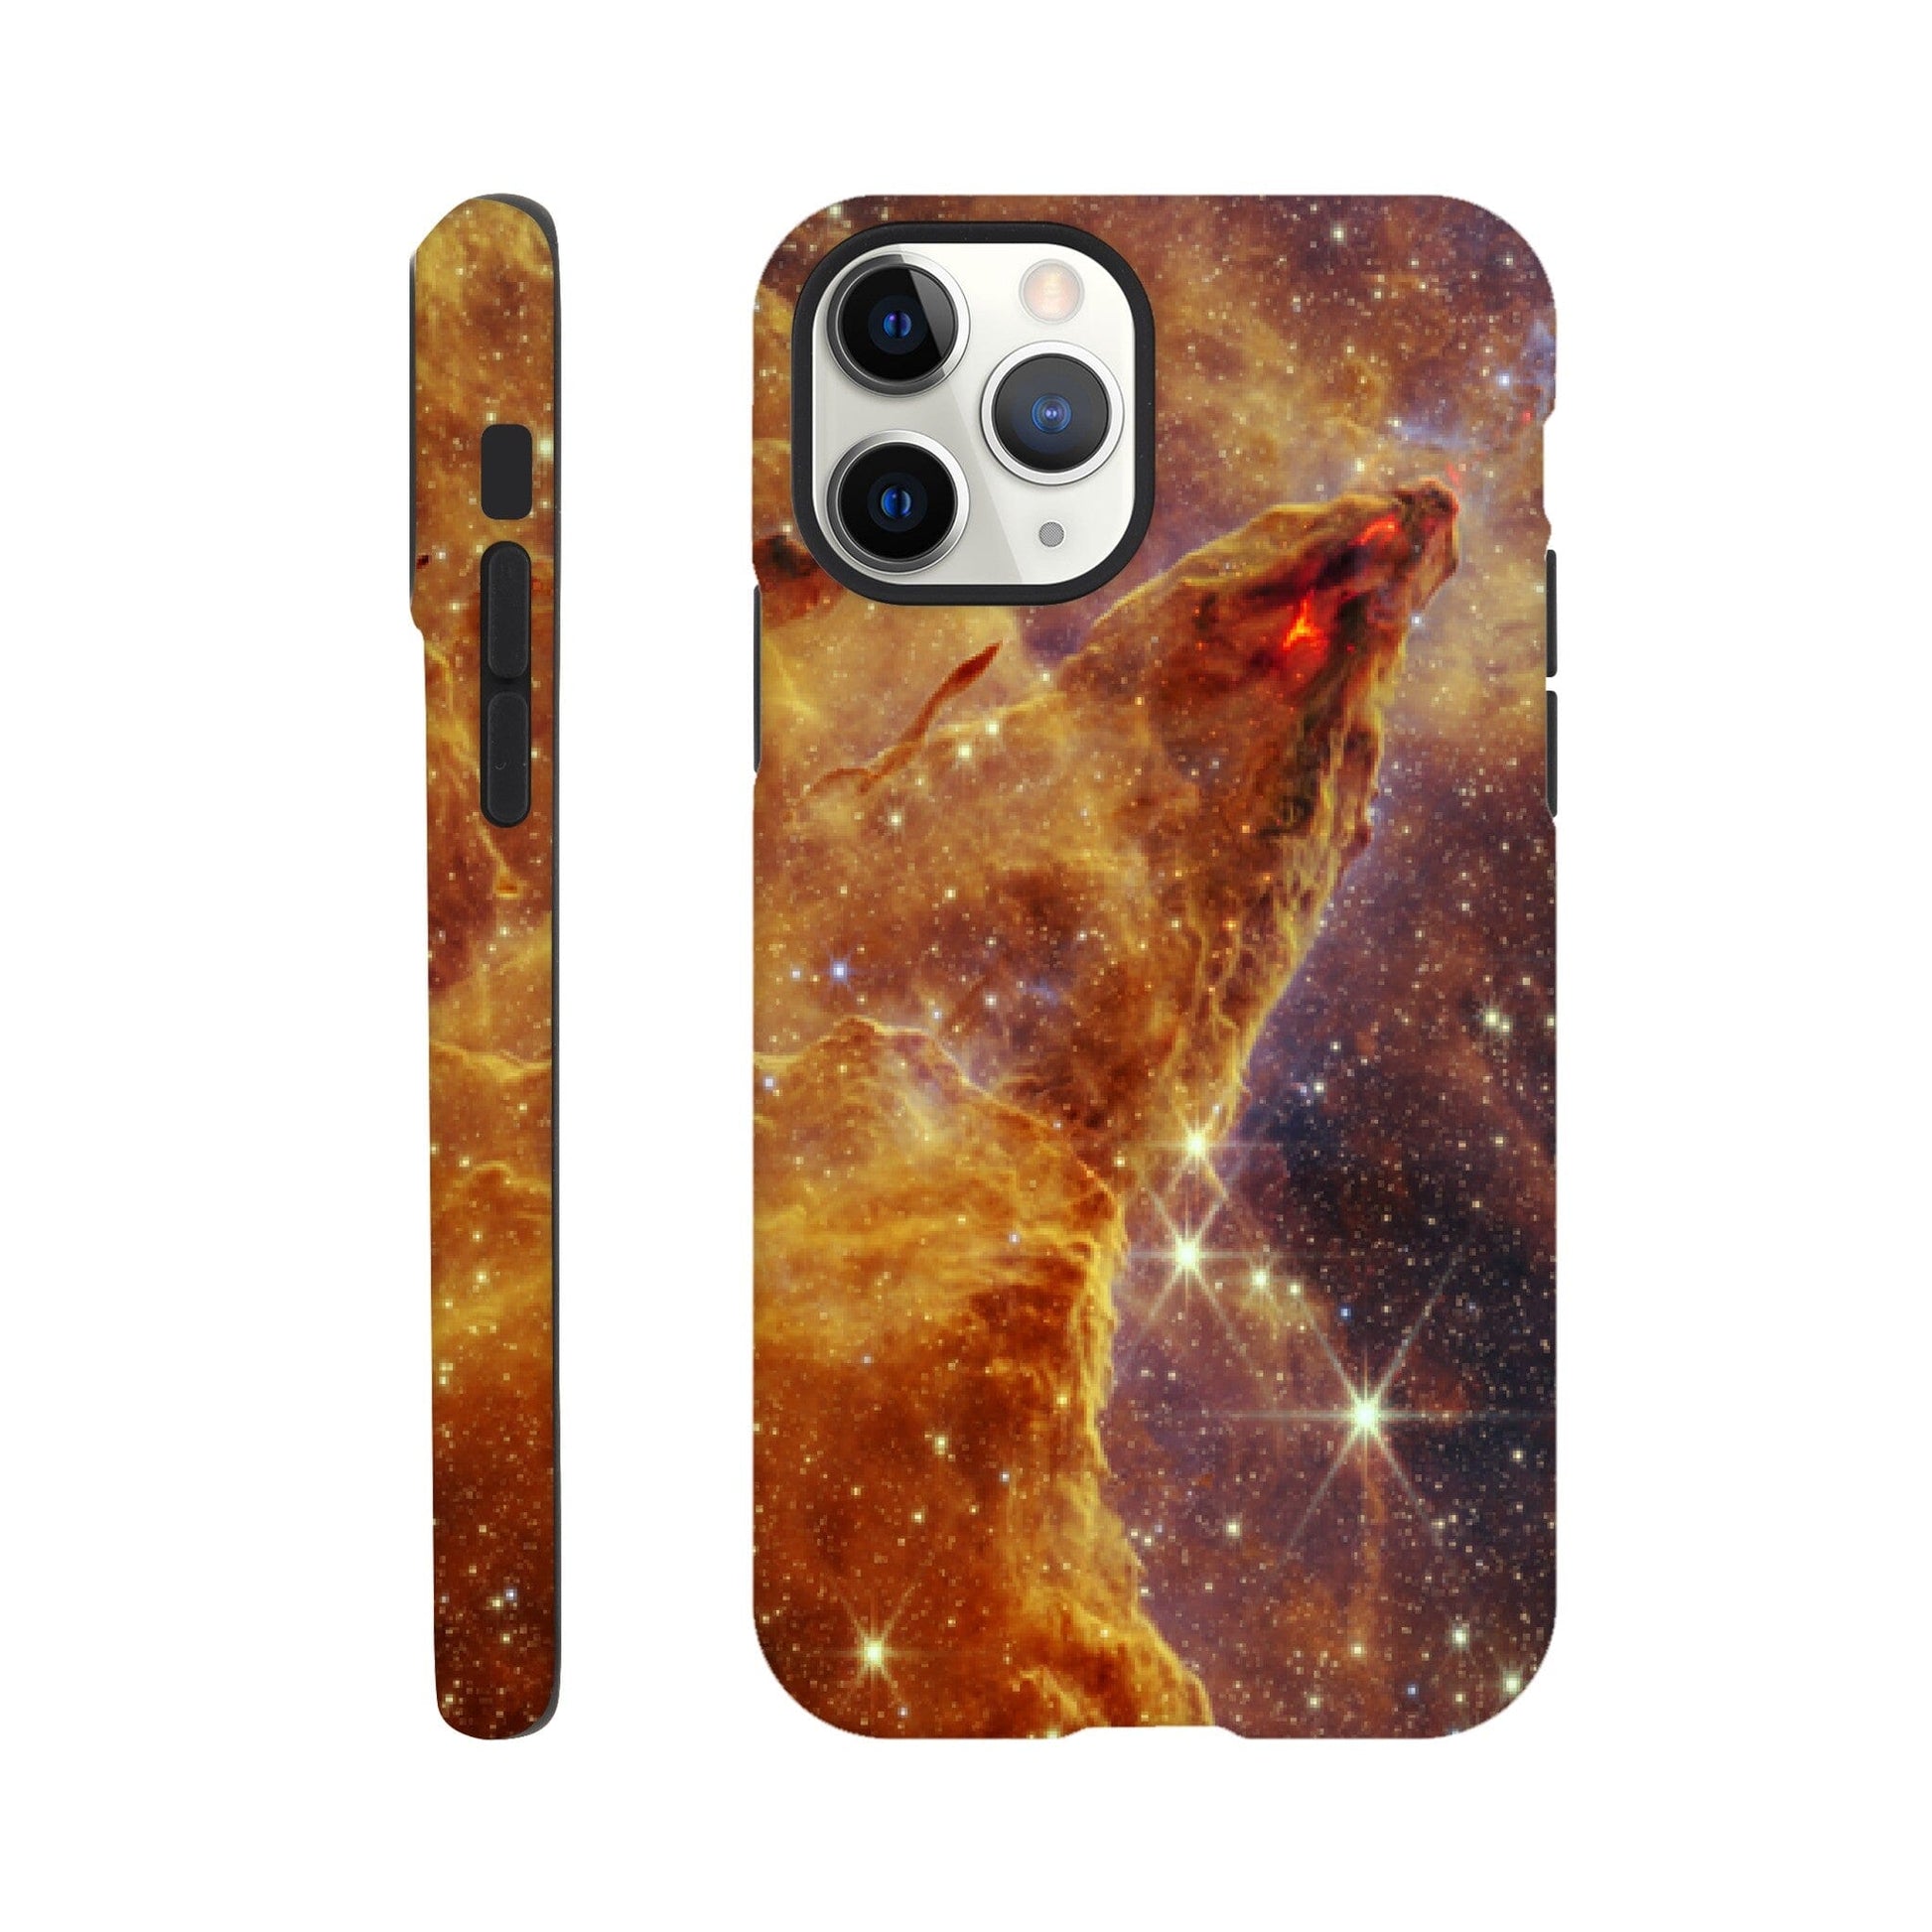 NASA - Phone Case Tough - 9. Pillars of Creation (NIRCam Image) - James Webb Space Telescope Phone Case TP Aviation Art iPhone 11 Pro 